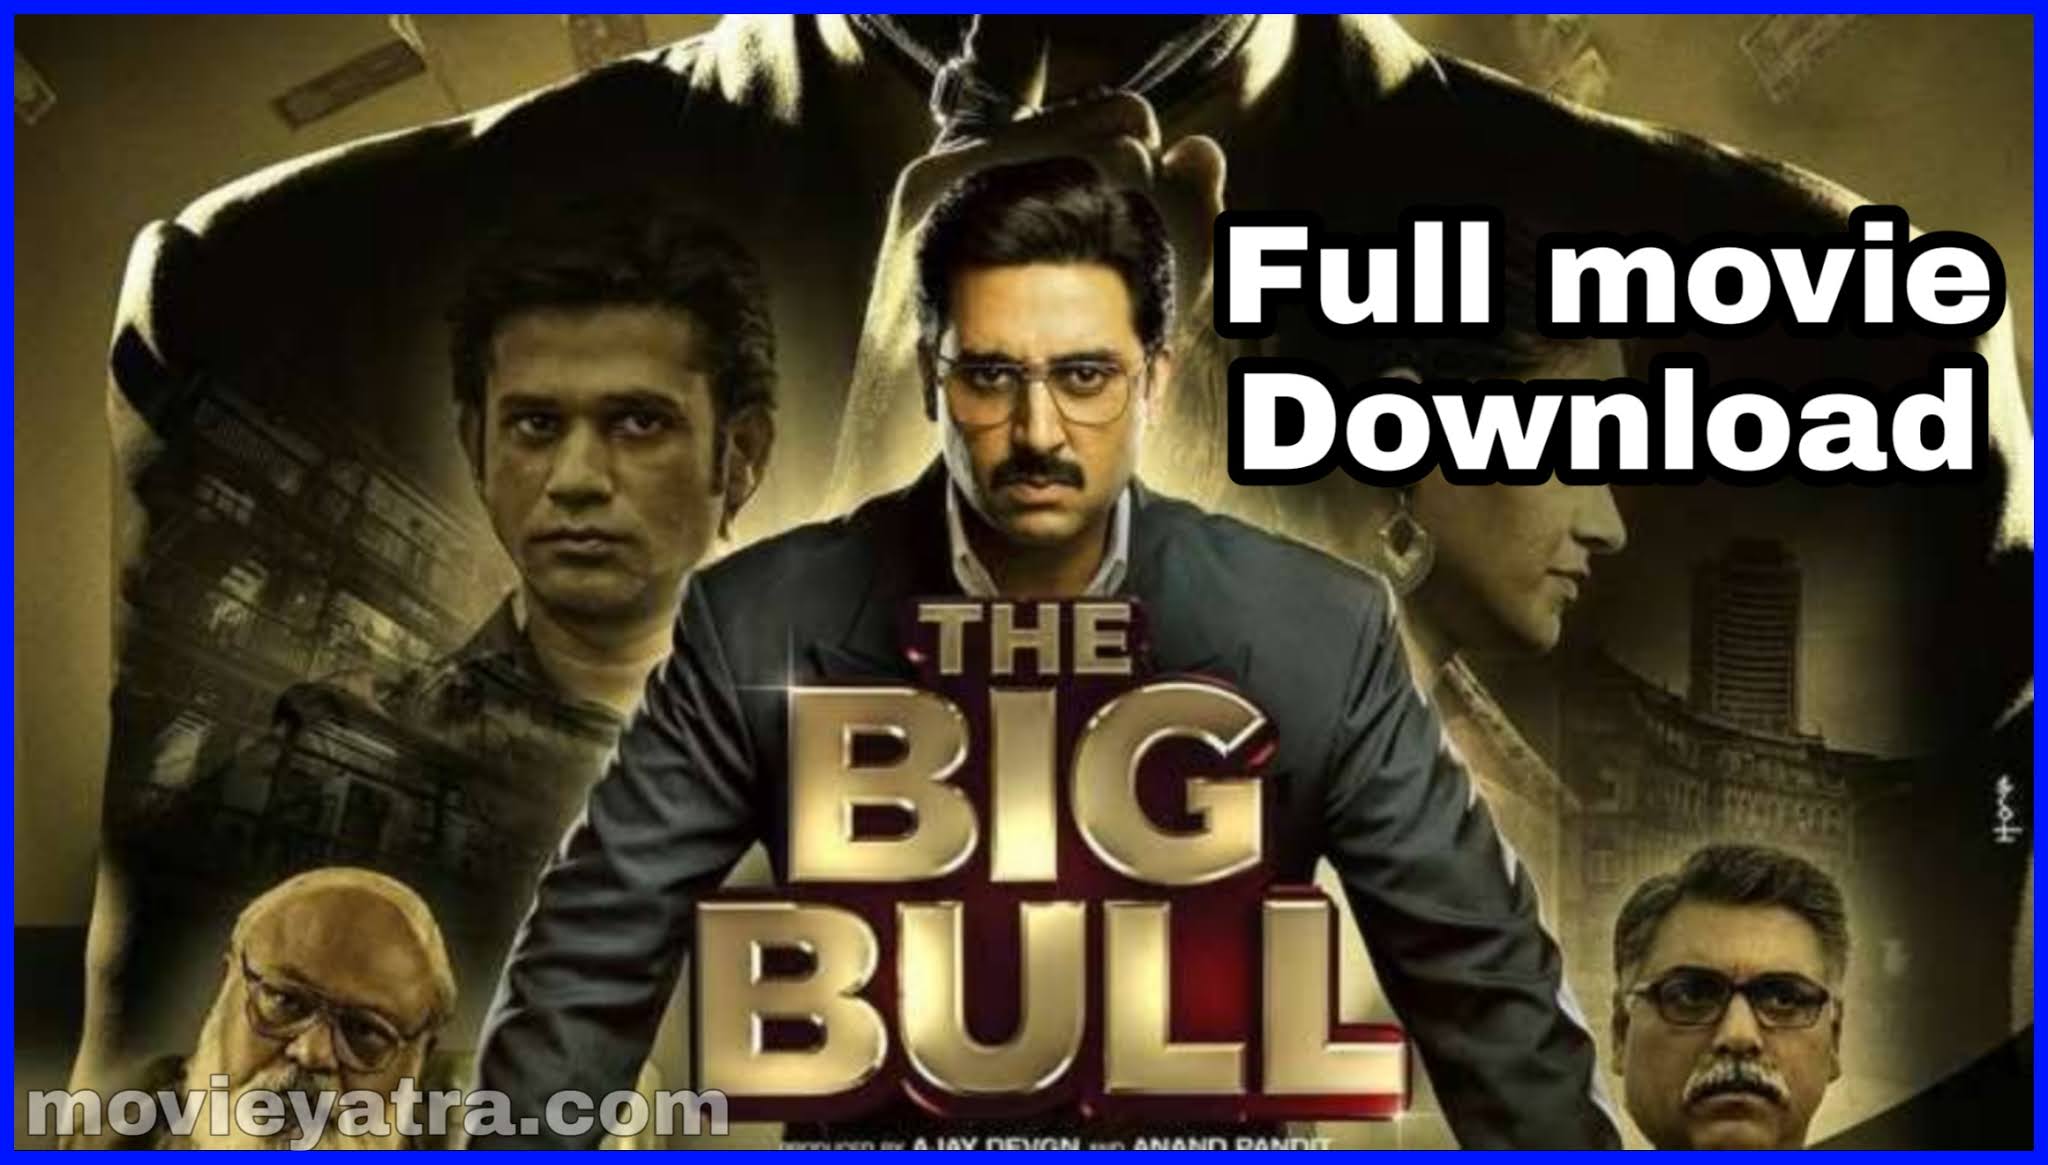 The Big Bull Movie Download | The Big Bull Movie Review in Hindi | The Big Bull Trailer | The Big Bull Abhishek Bachchan New movie Download